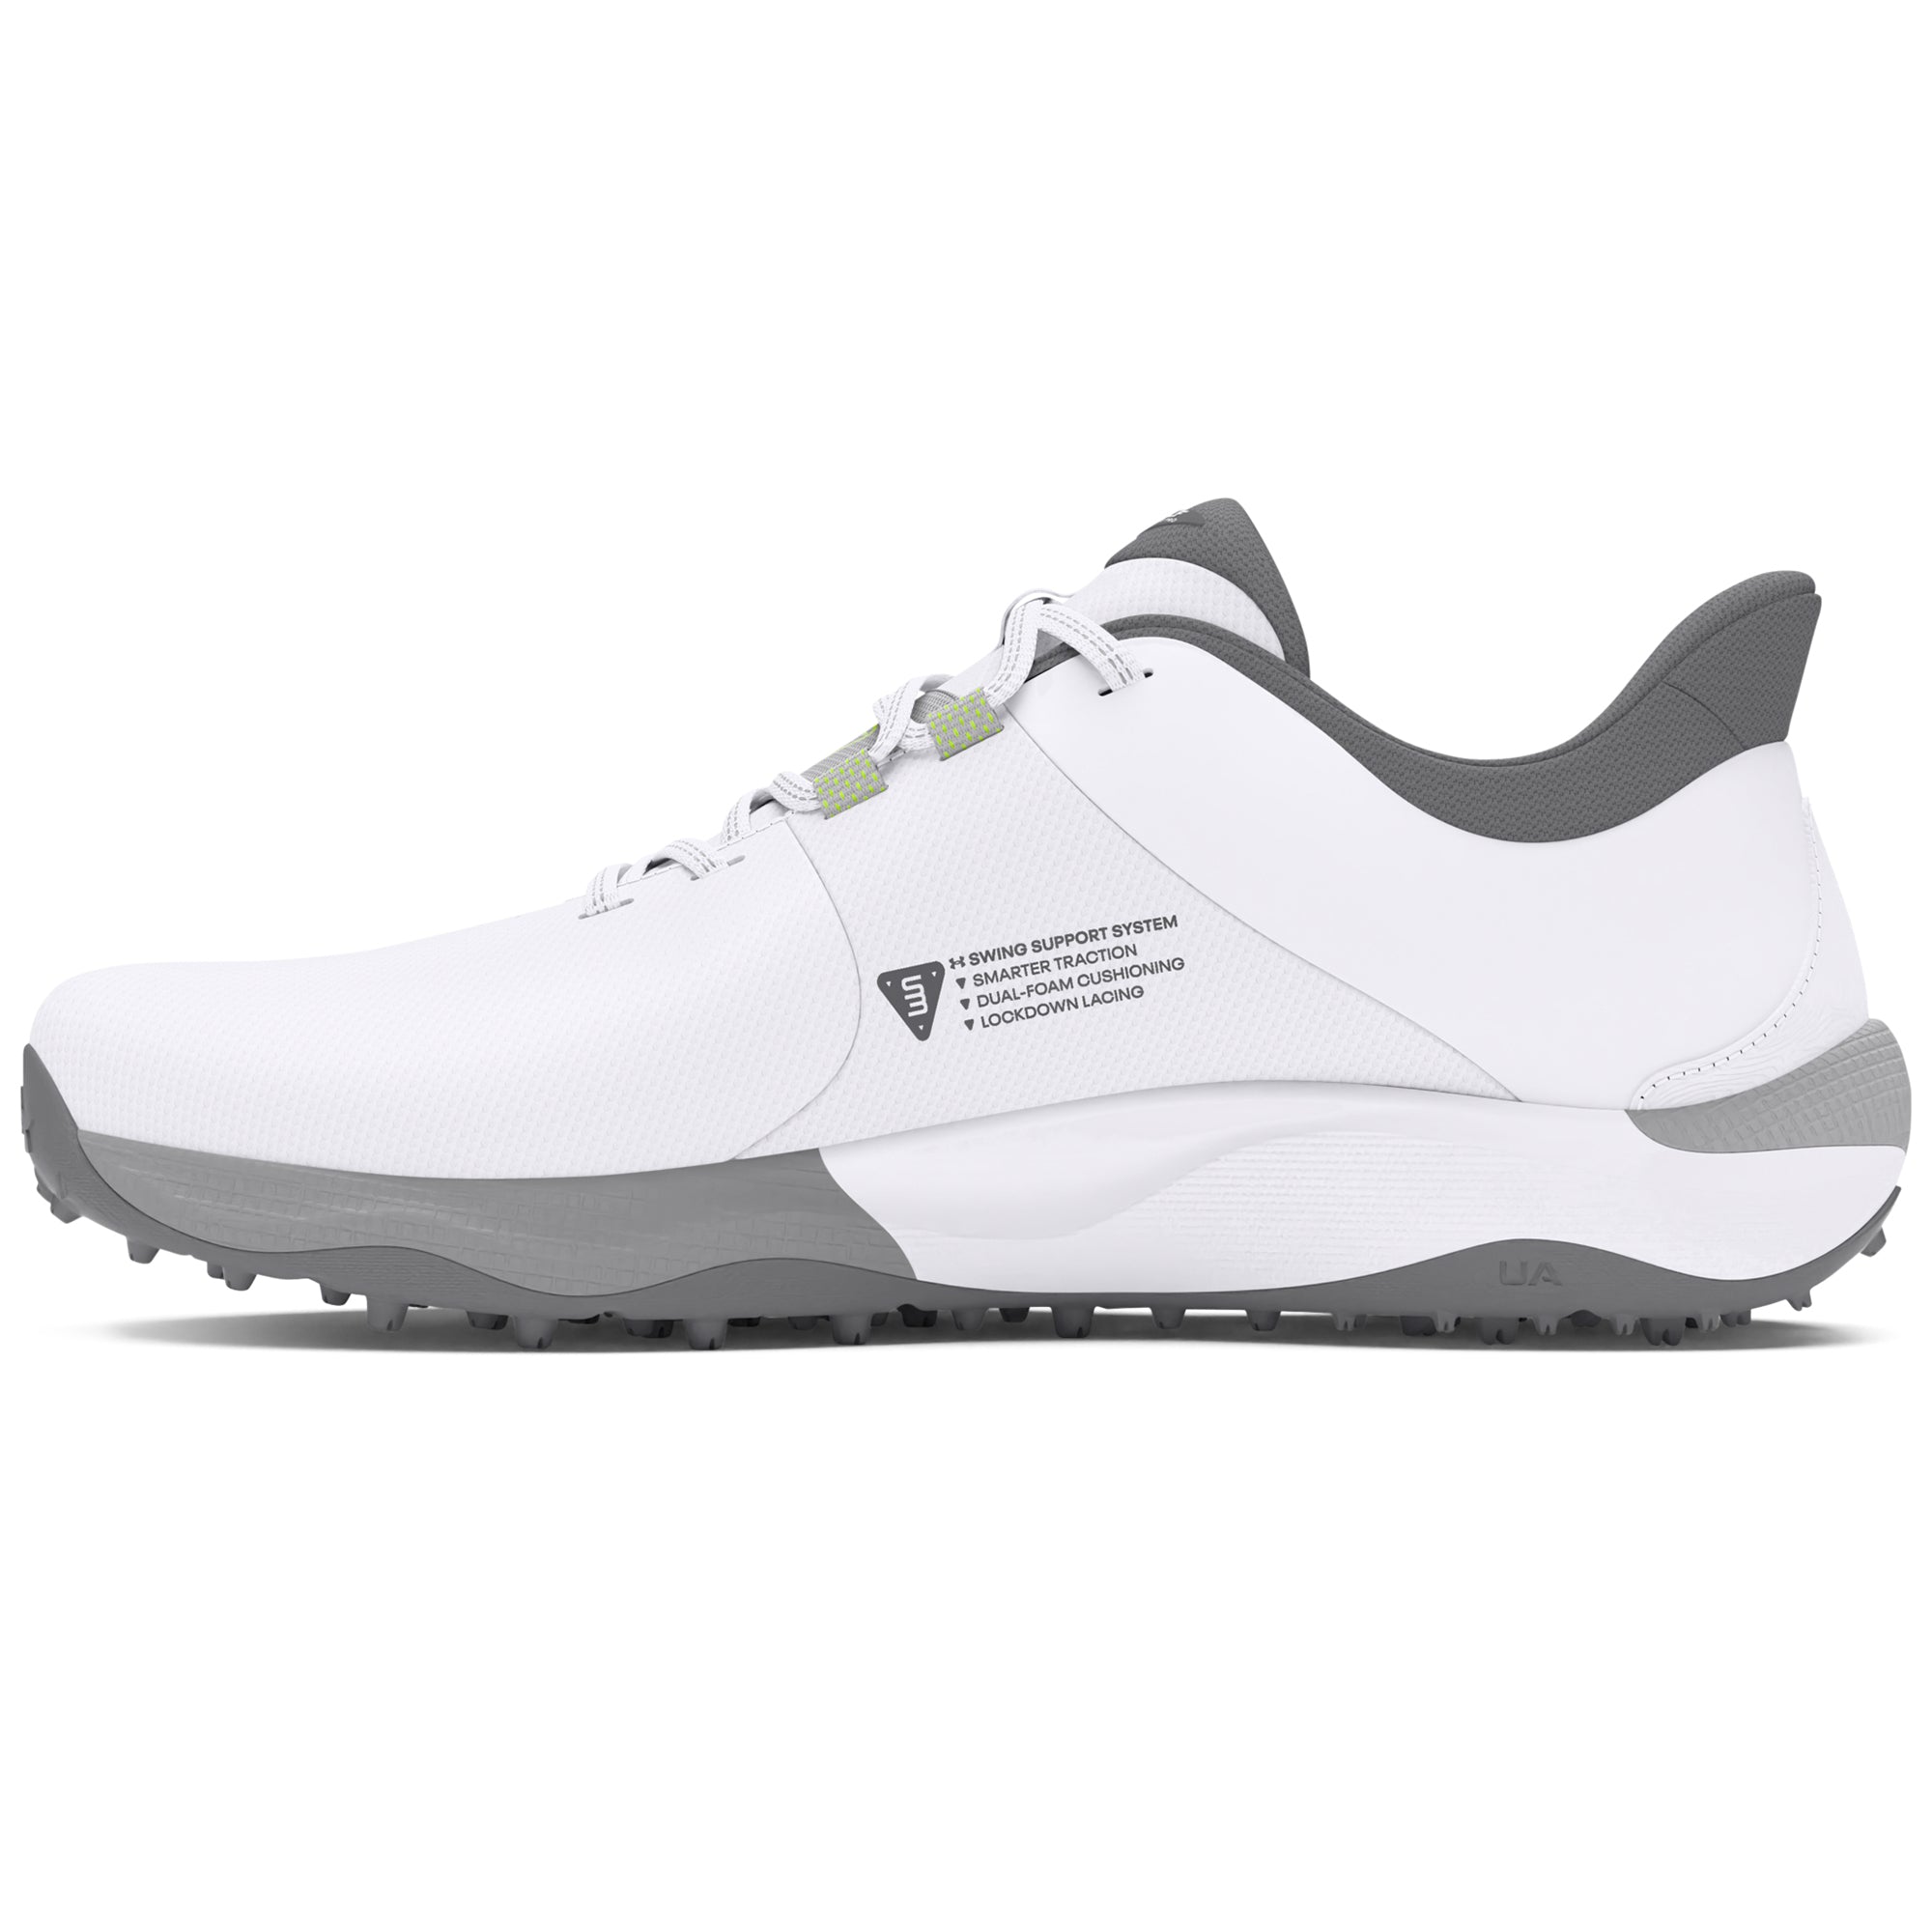 under-armour-drive-pro-sl-e-golf-shoes-3026921-white-100